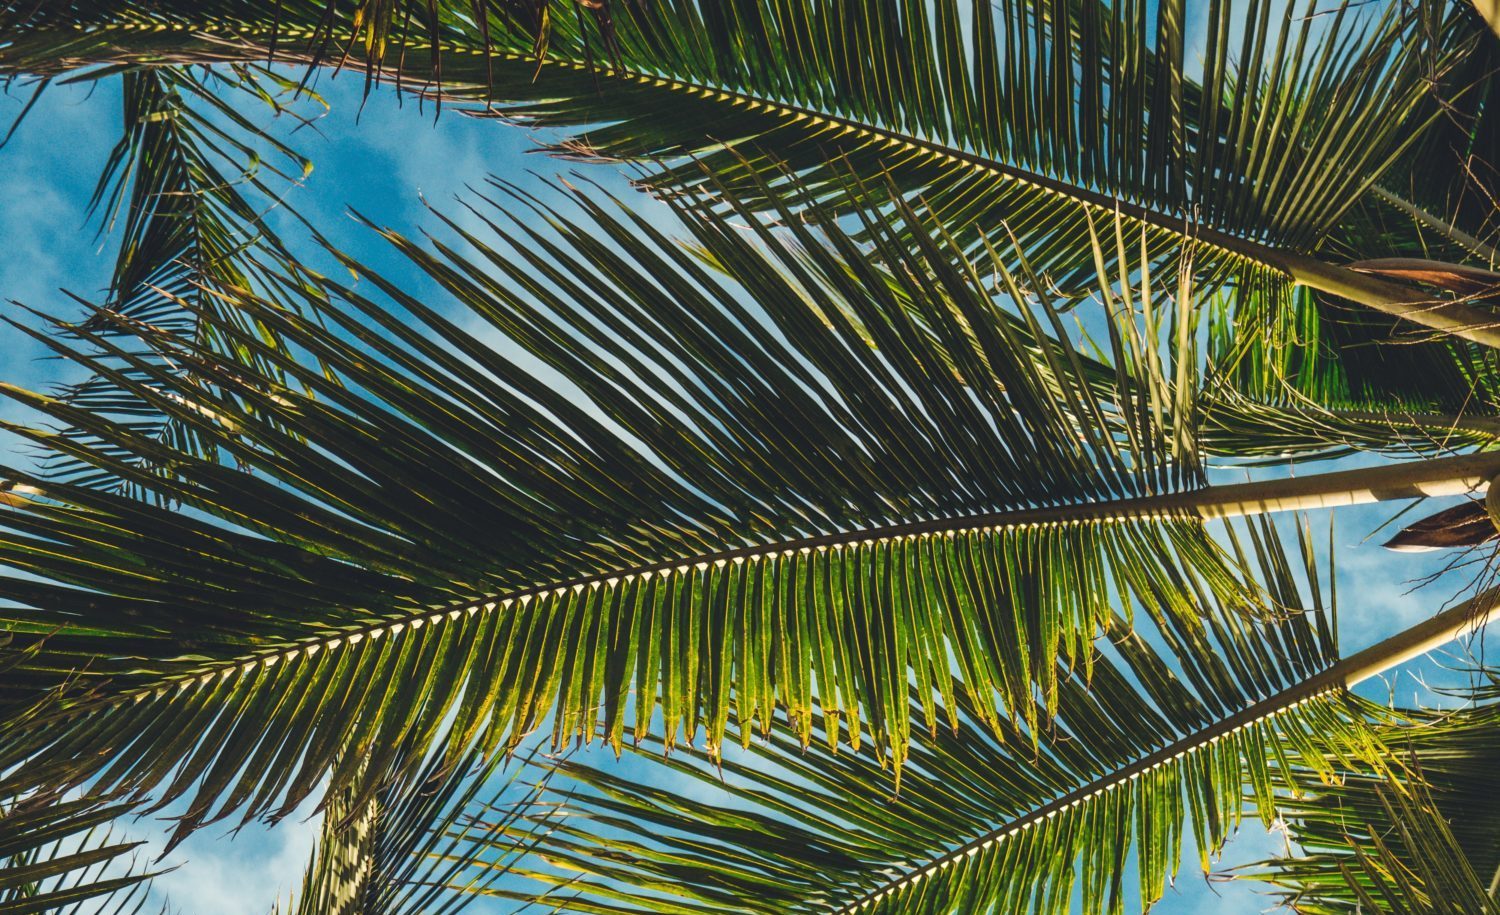 palm trees and blue sky